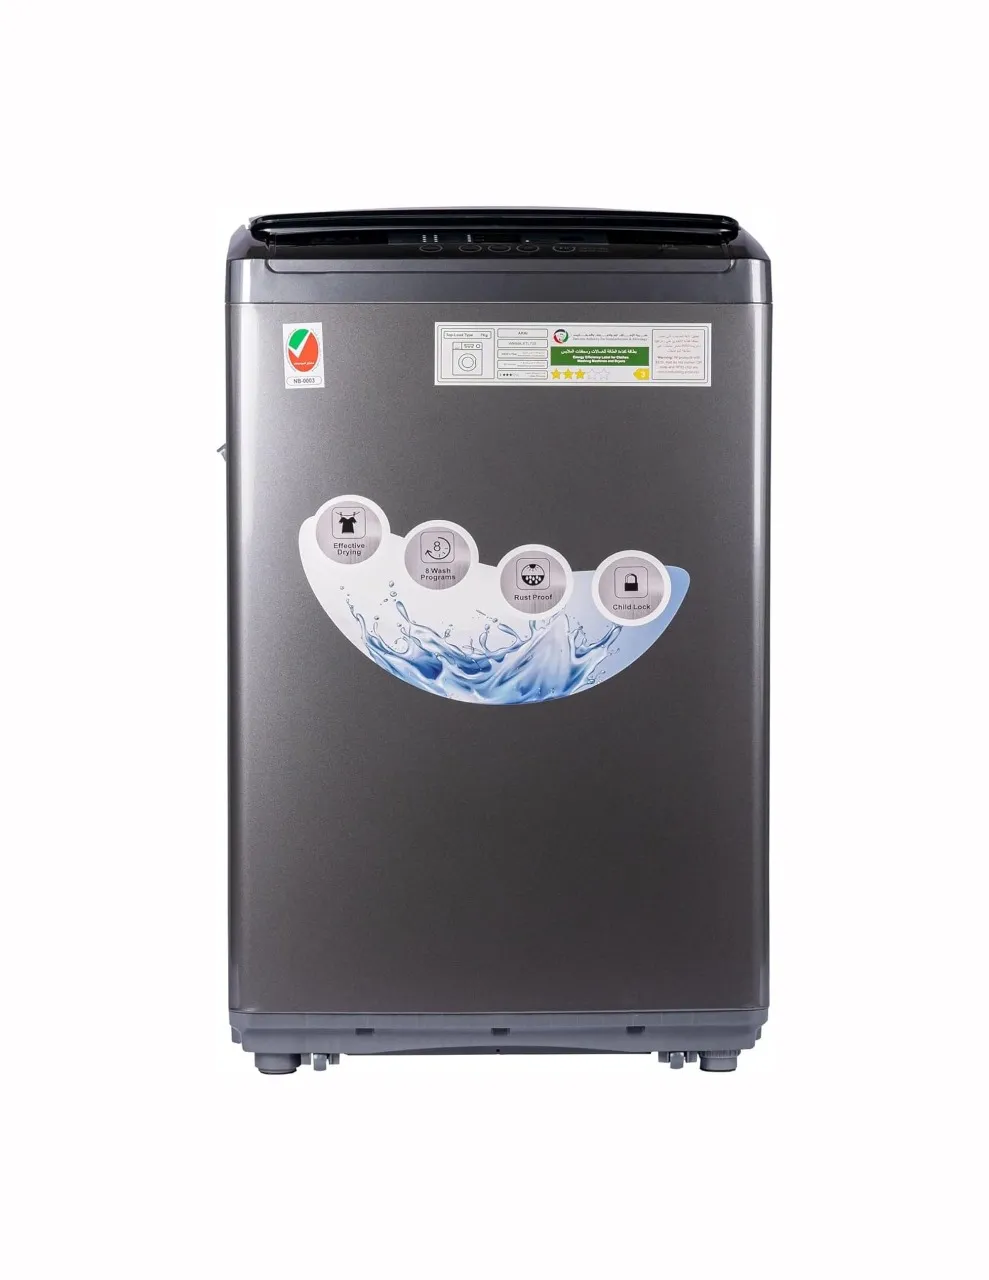 Akai 7 Kg Top Load Washing Machine Color Silver Model | WMMA-XTL73S | 1 Year Brand Warranty.